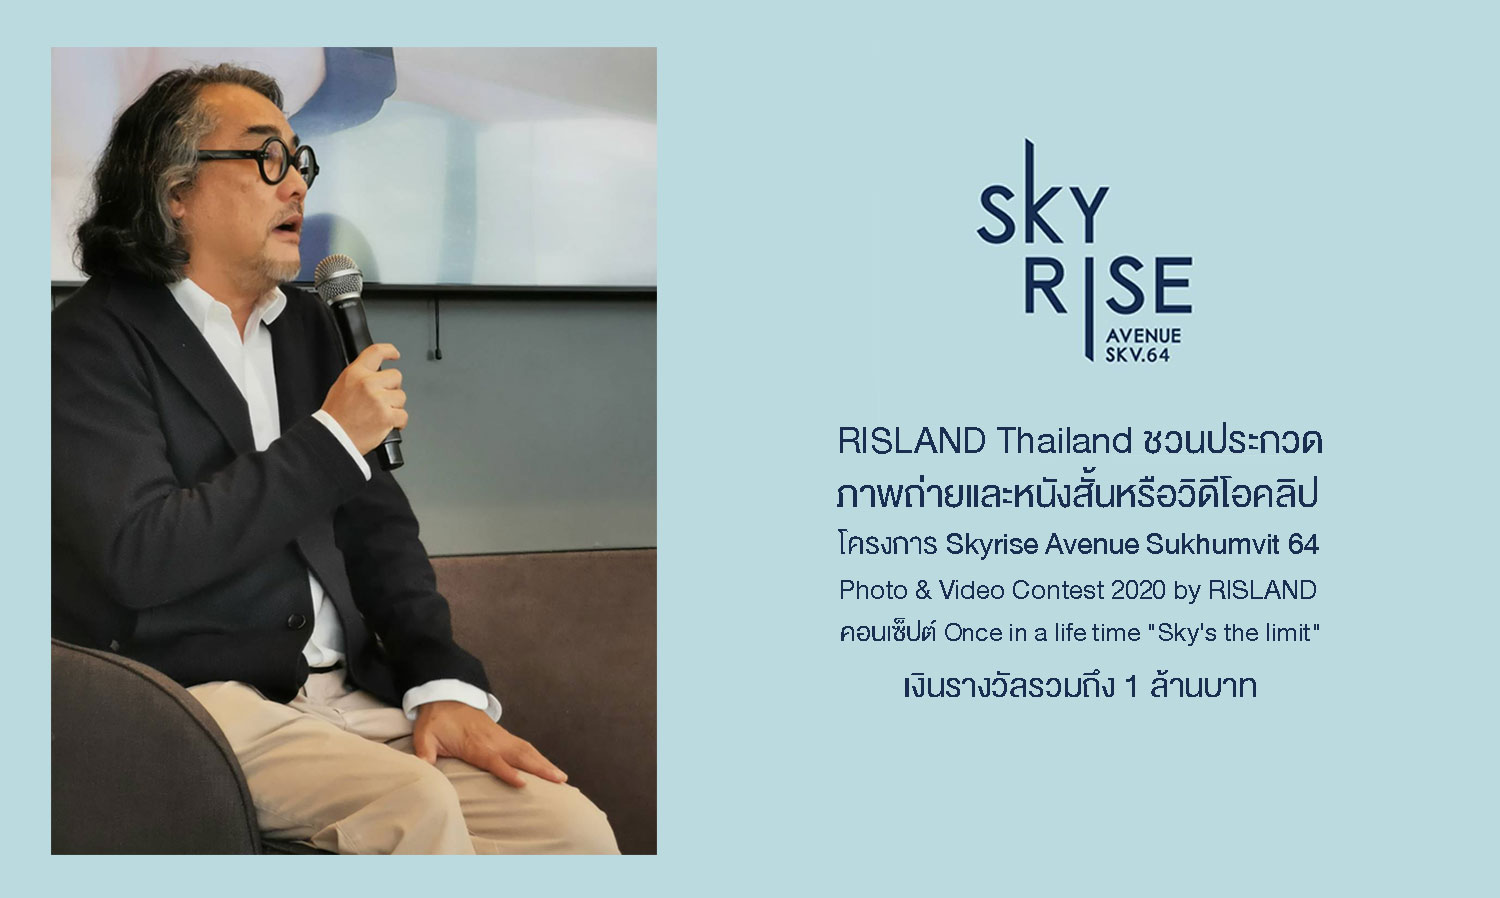 RISLAND Thailand ชวนประกวดภาพถ่ายและหนังสั้นหรือวิดีโอคลิป โครงการ Skyrise Avenue Sukhumvit 64 Photo & Video Contest 2020 by RISLAND ในคอนเซ็ปต์ Once in a life time 